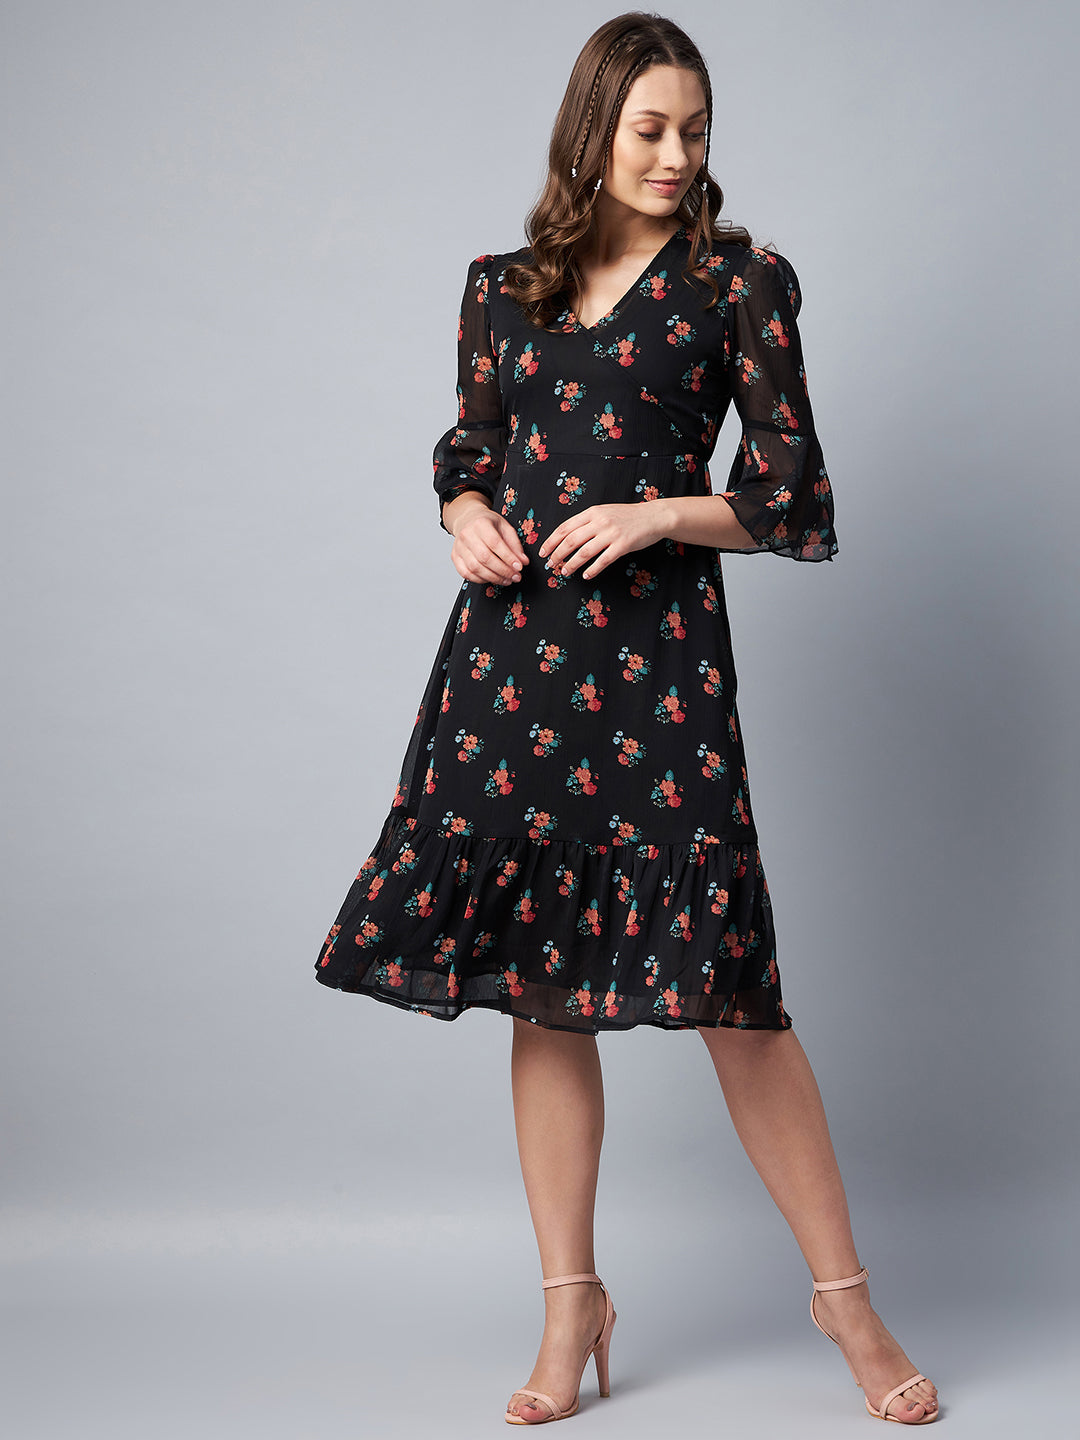 Women's Black Floral Print Bell Sleeve Dress